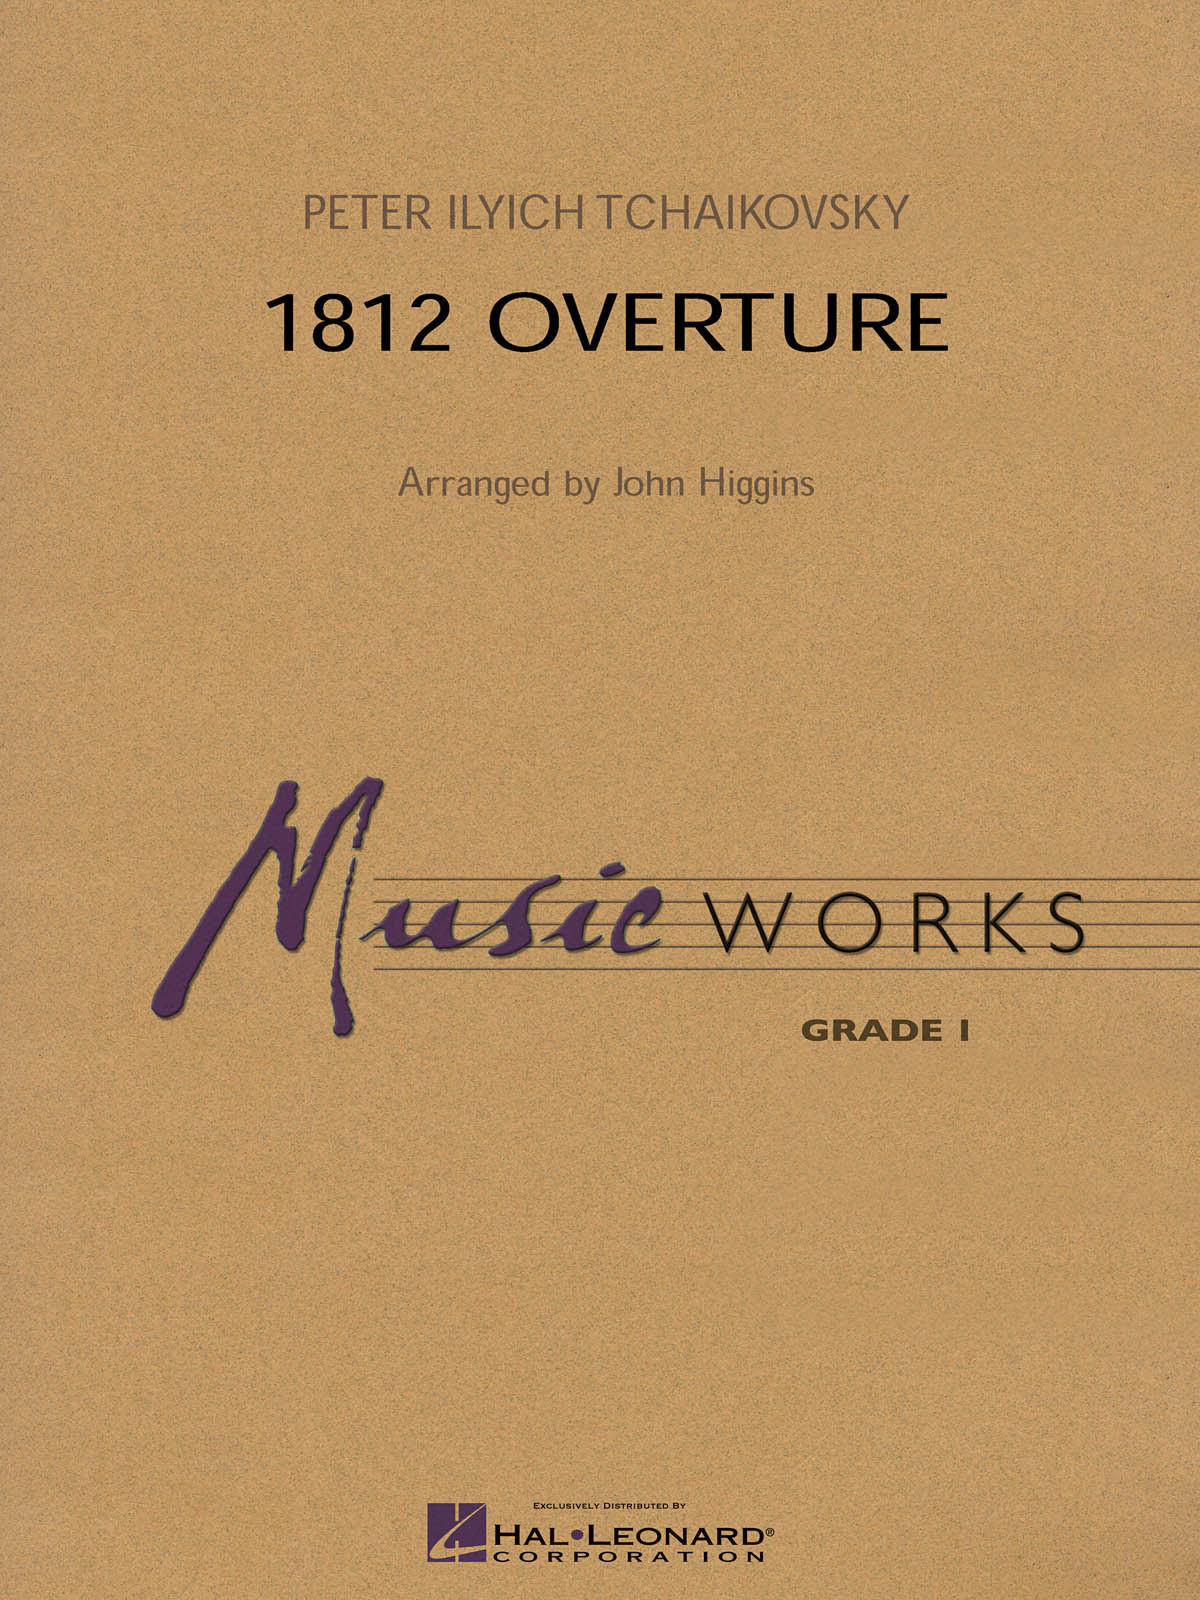 Pyotr Ilyich Tchaikovsky: 1812 Overture: Concert Band: Score and Parts